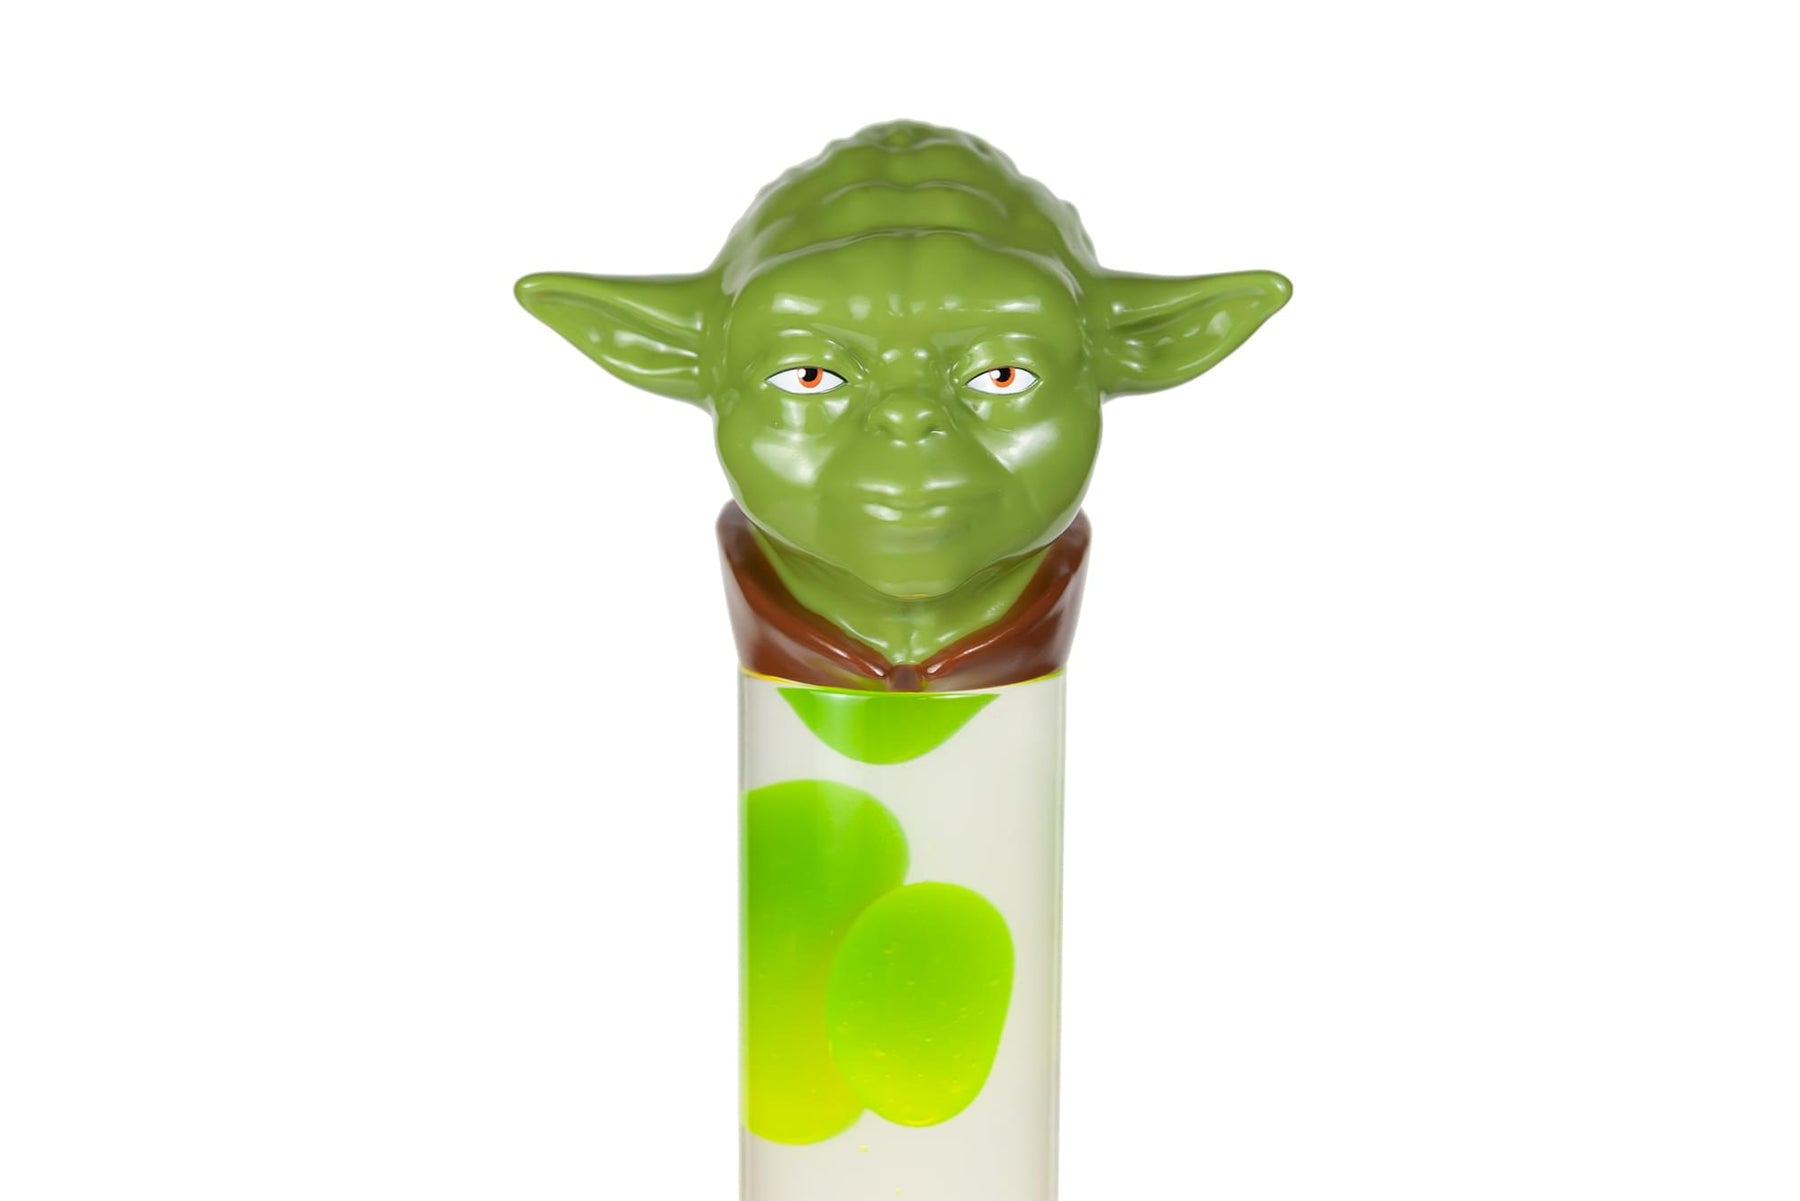 Star Wars Jedi Master Yoda 18-Inch 3D Top Motion Lamp Mood Light